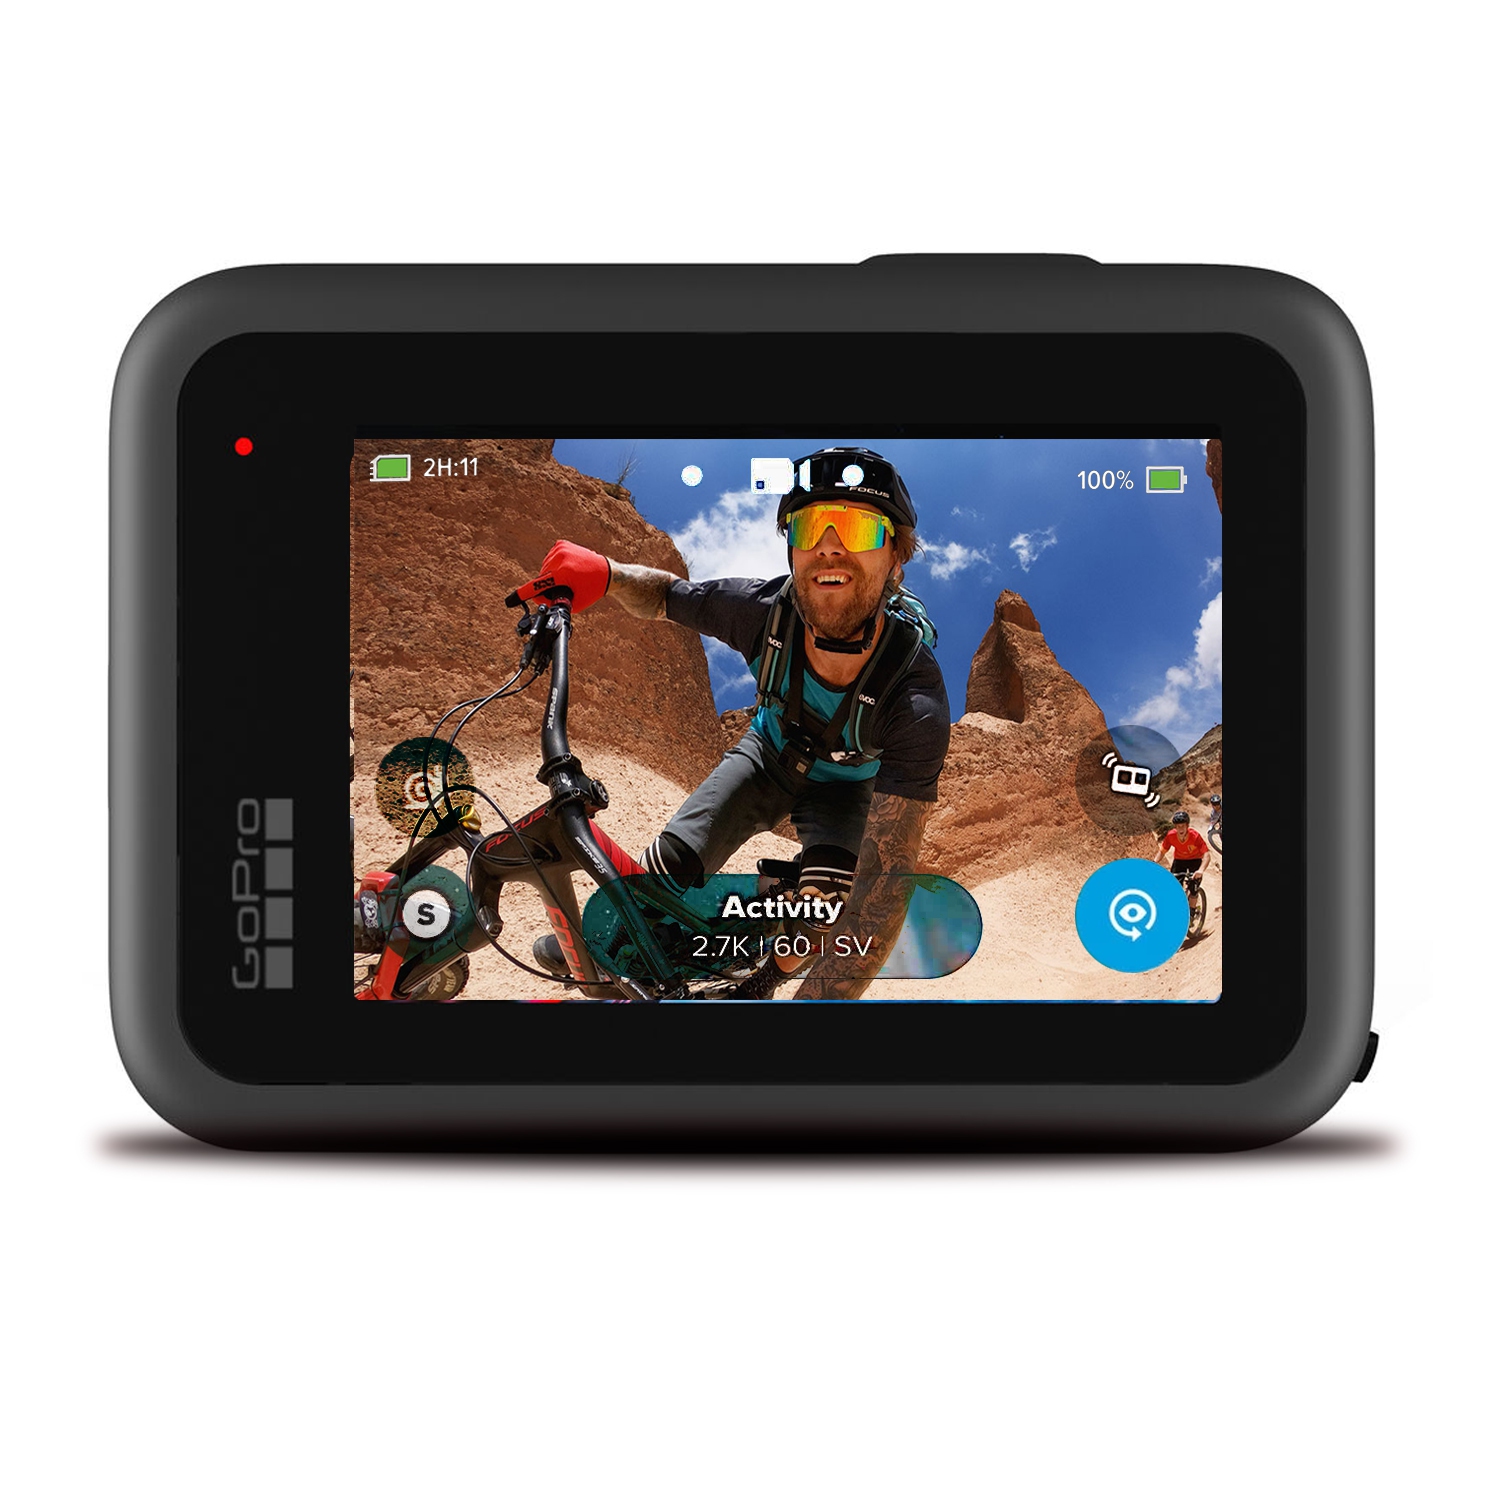 GoPro HERO9 Black - Waterproof Action Camera | Best Buy Canada